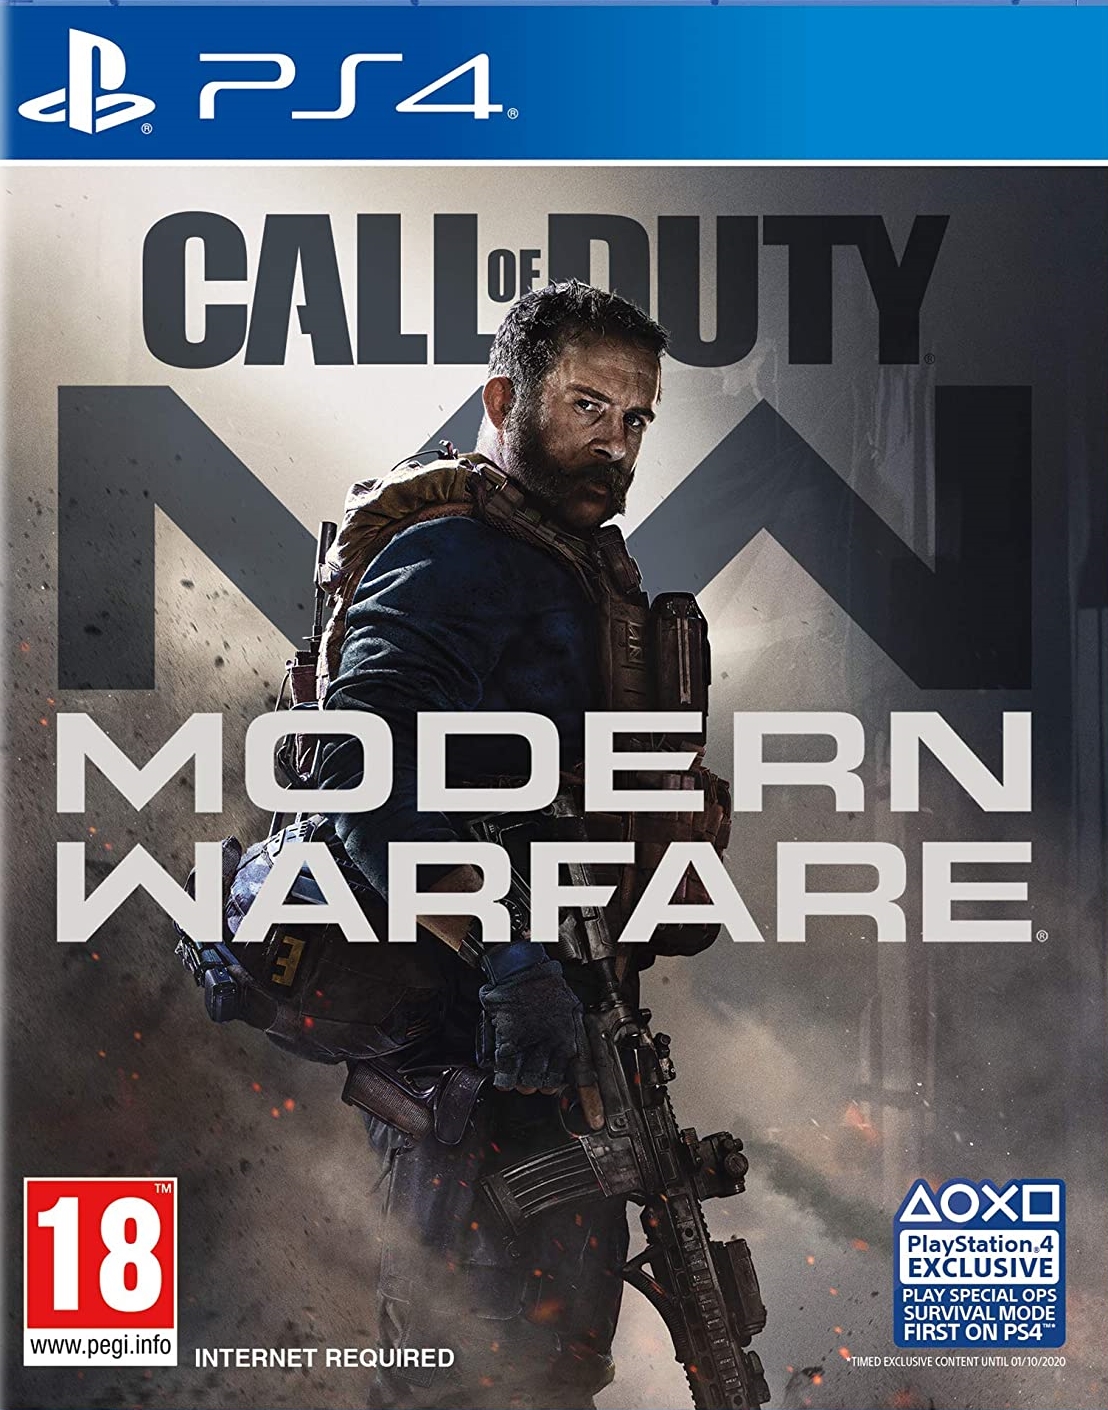 jaquette reduite de Call of Duty: Modern Warfare (Remake) sur Playstation 4